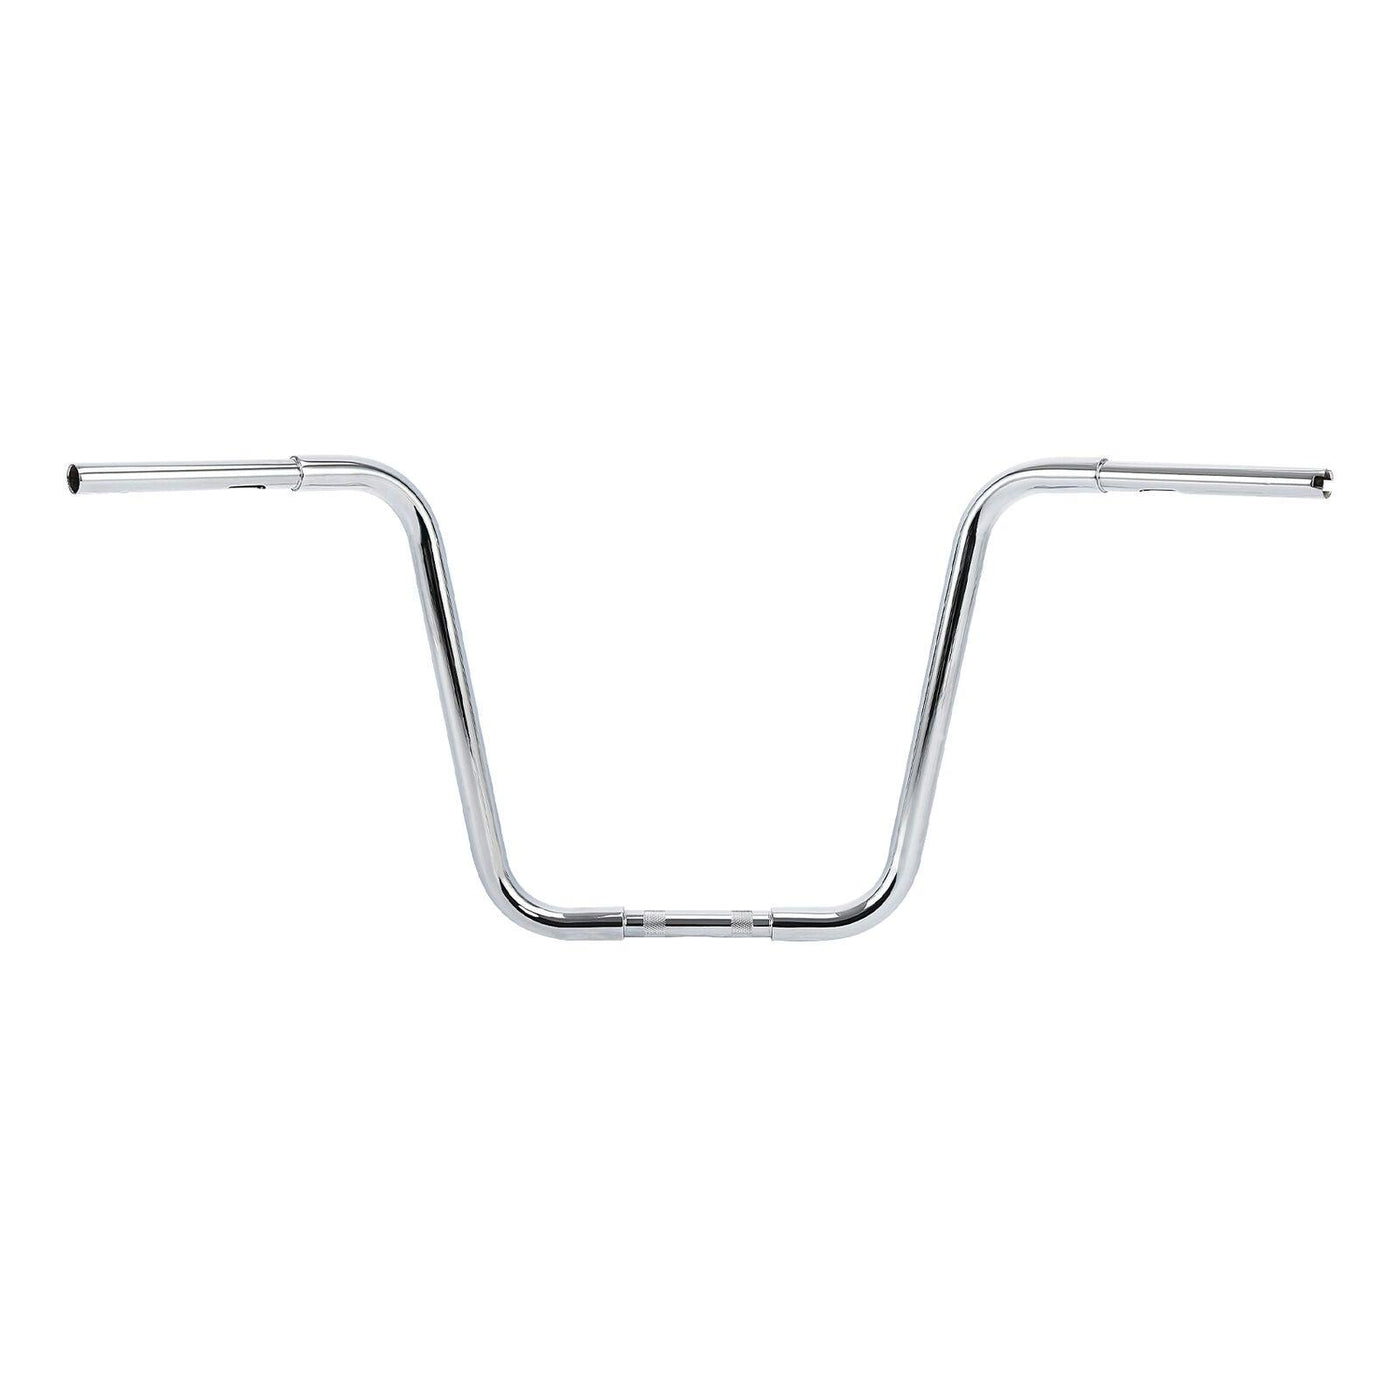 Chrome Ape Hanger Bar 1 1/4" 18" Rise Handlebar Fit For Harley Sportster XL FLST - Moto Life Products